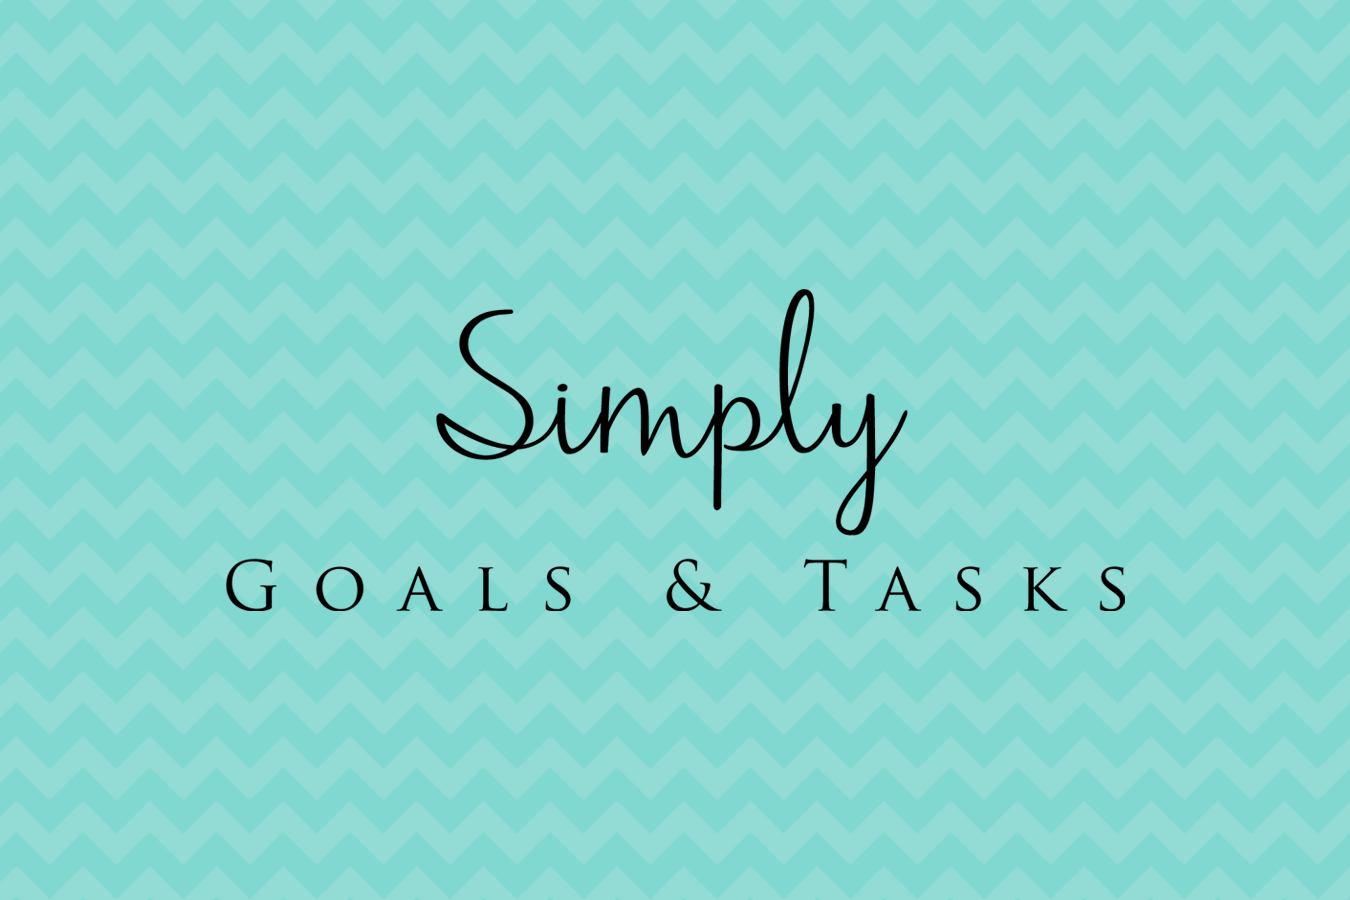 Simply Goals & Tasks